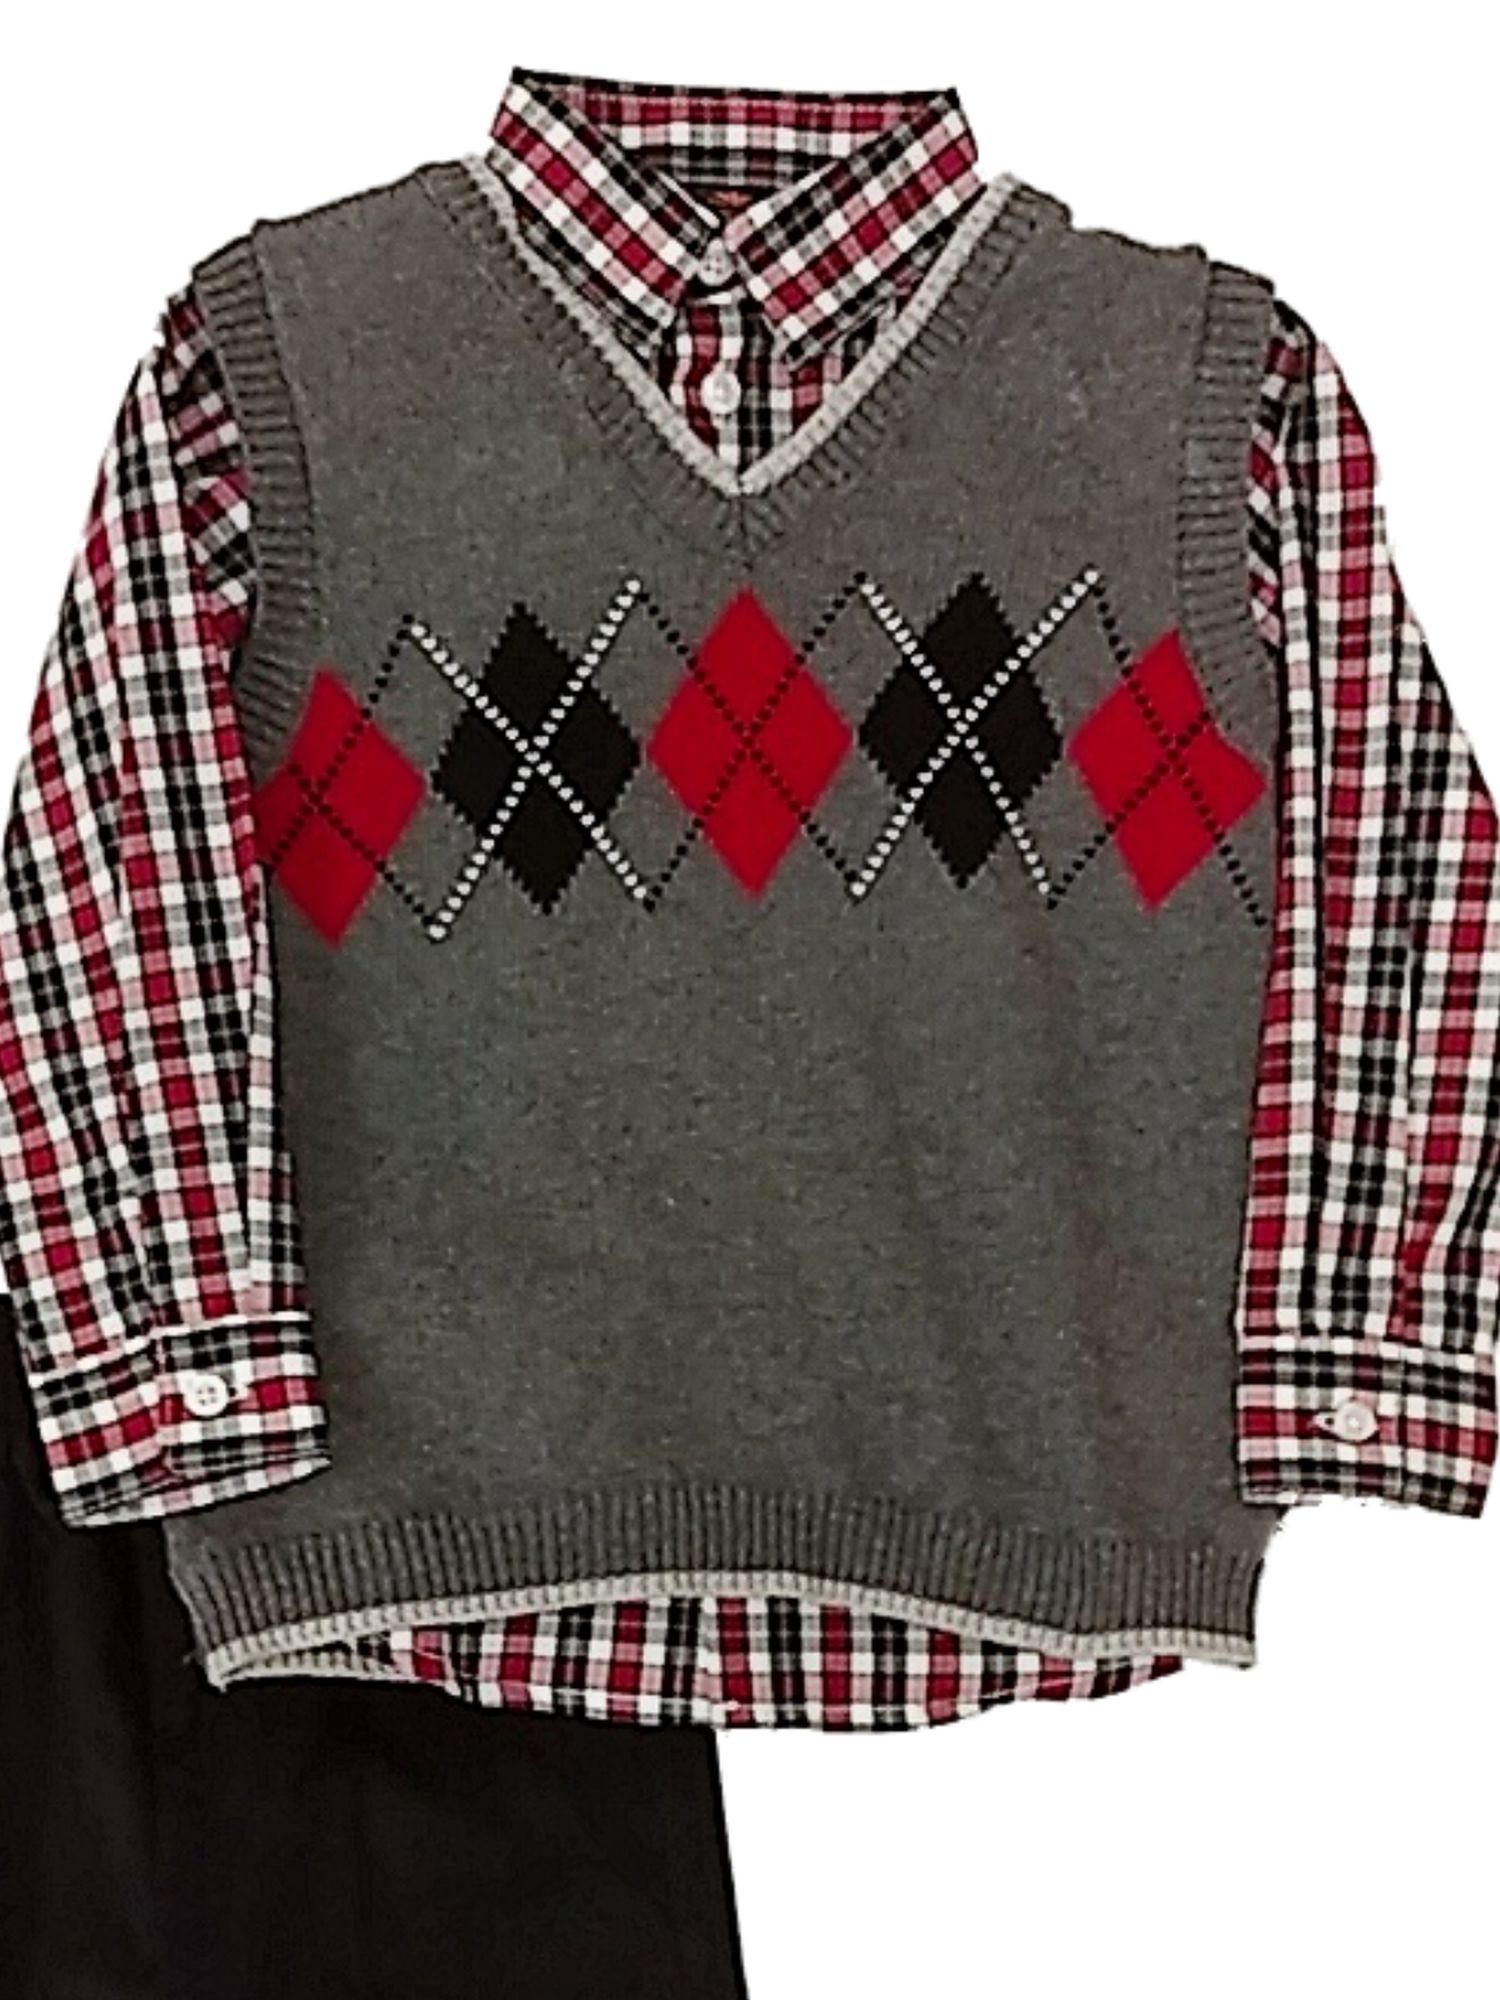 Dockers Toddler Boys Gray Sweater Vest Plaid Shirt & Corduroy Pants Outfit Set 4T